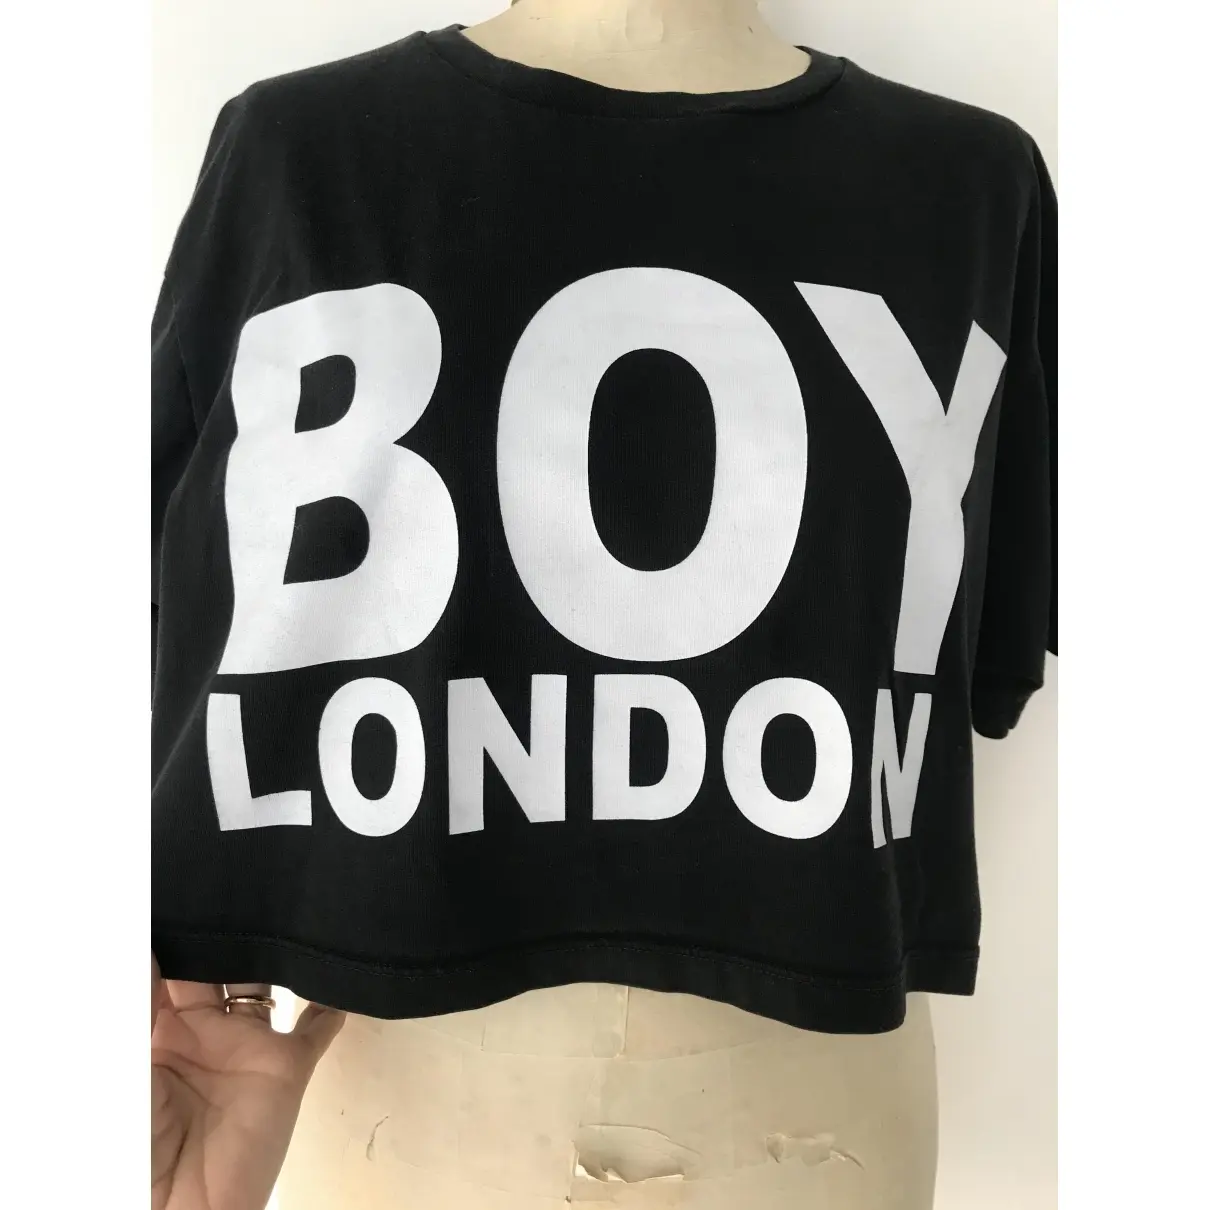 Boy London T-shirt for sale